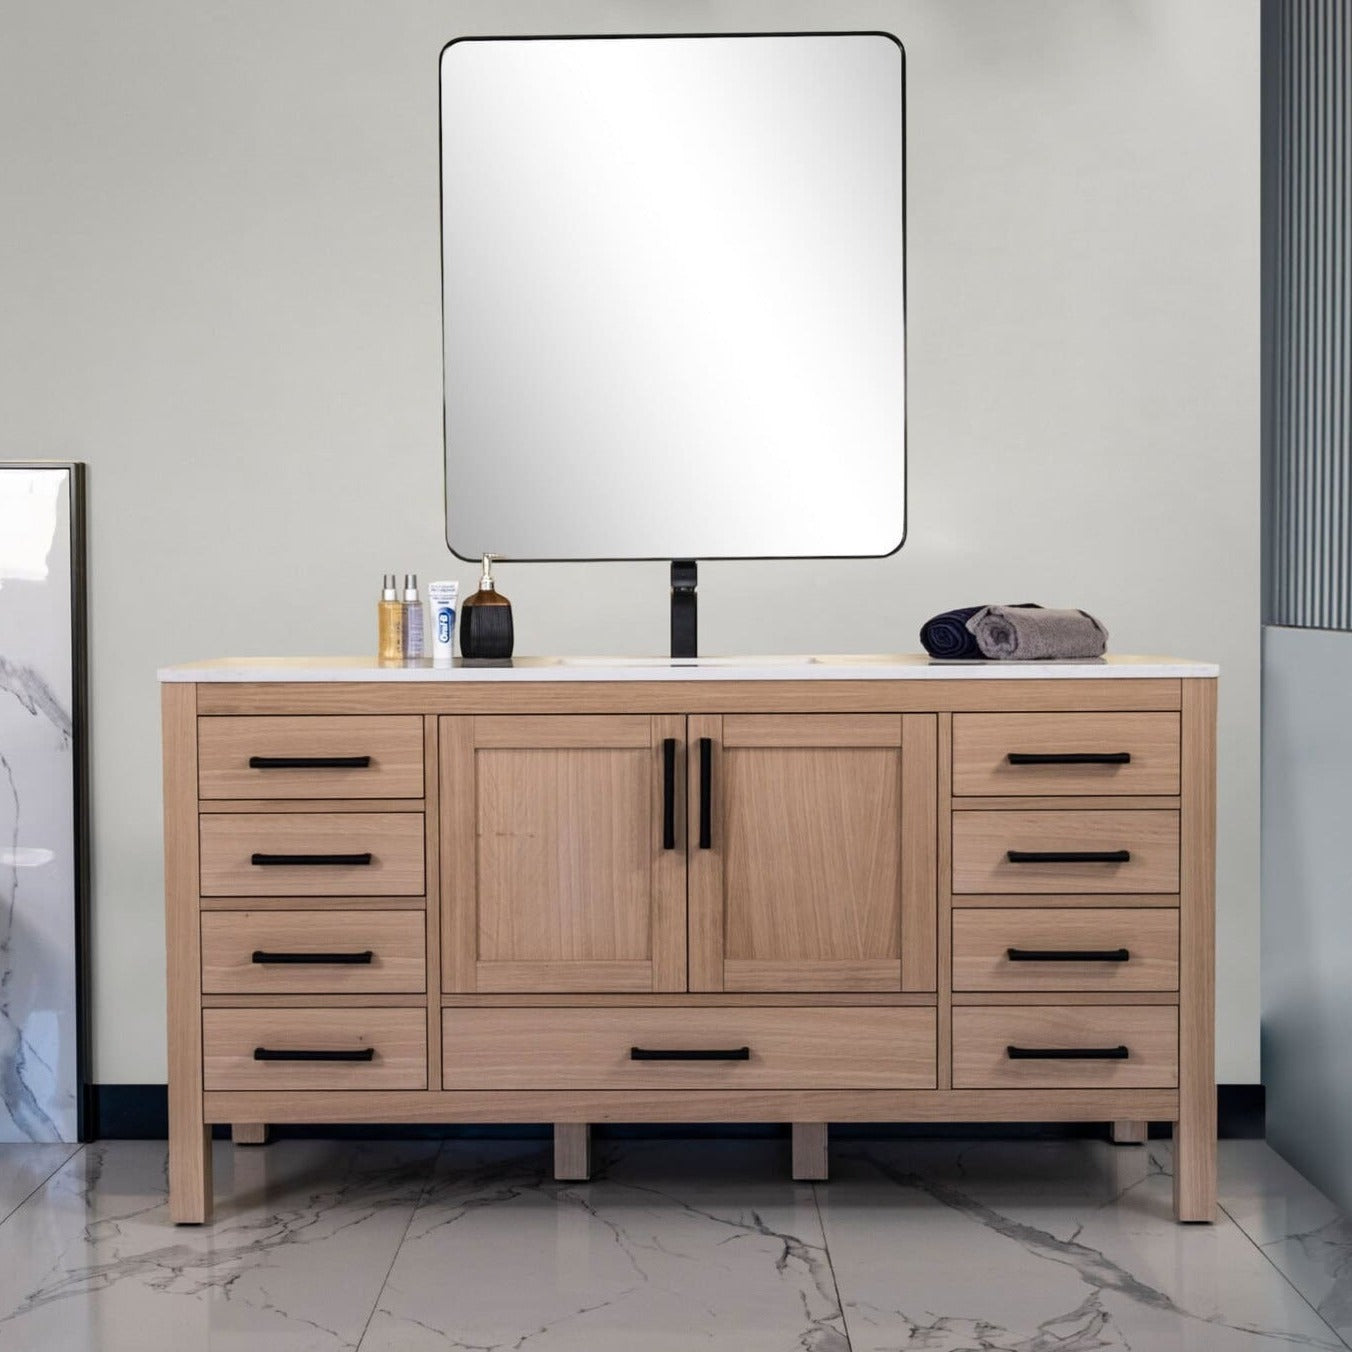 Ahley Bathroom Vanity Homelero 60"  #size_60"  #color_natural oak #hardware_brass